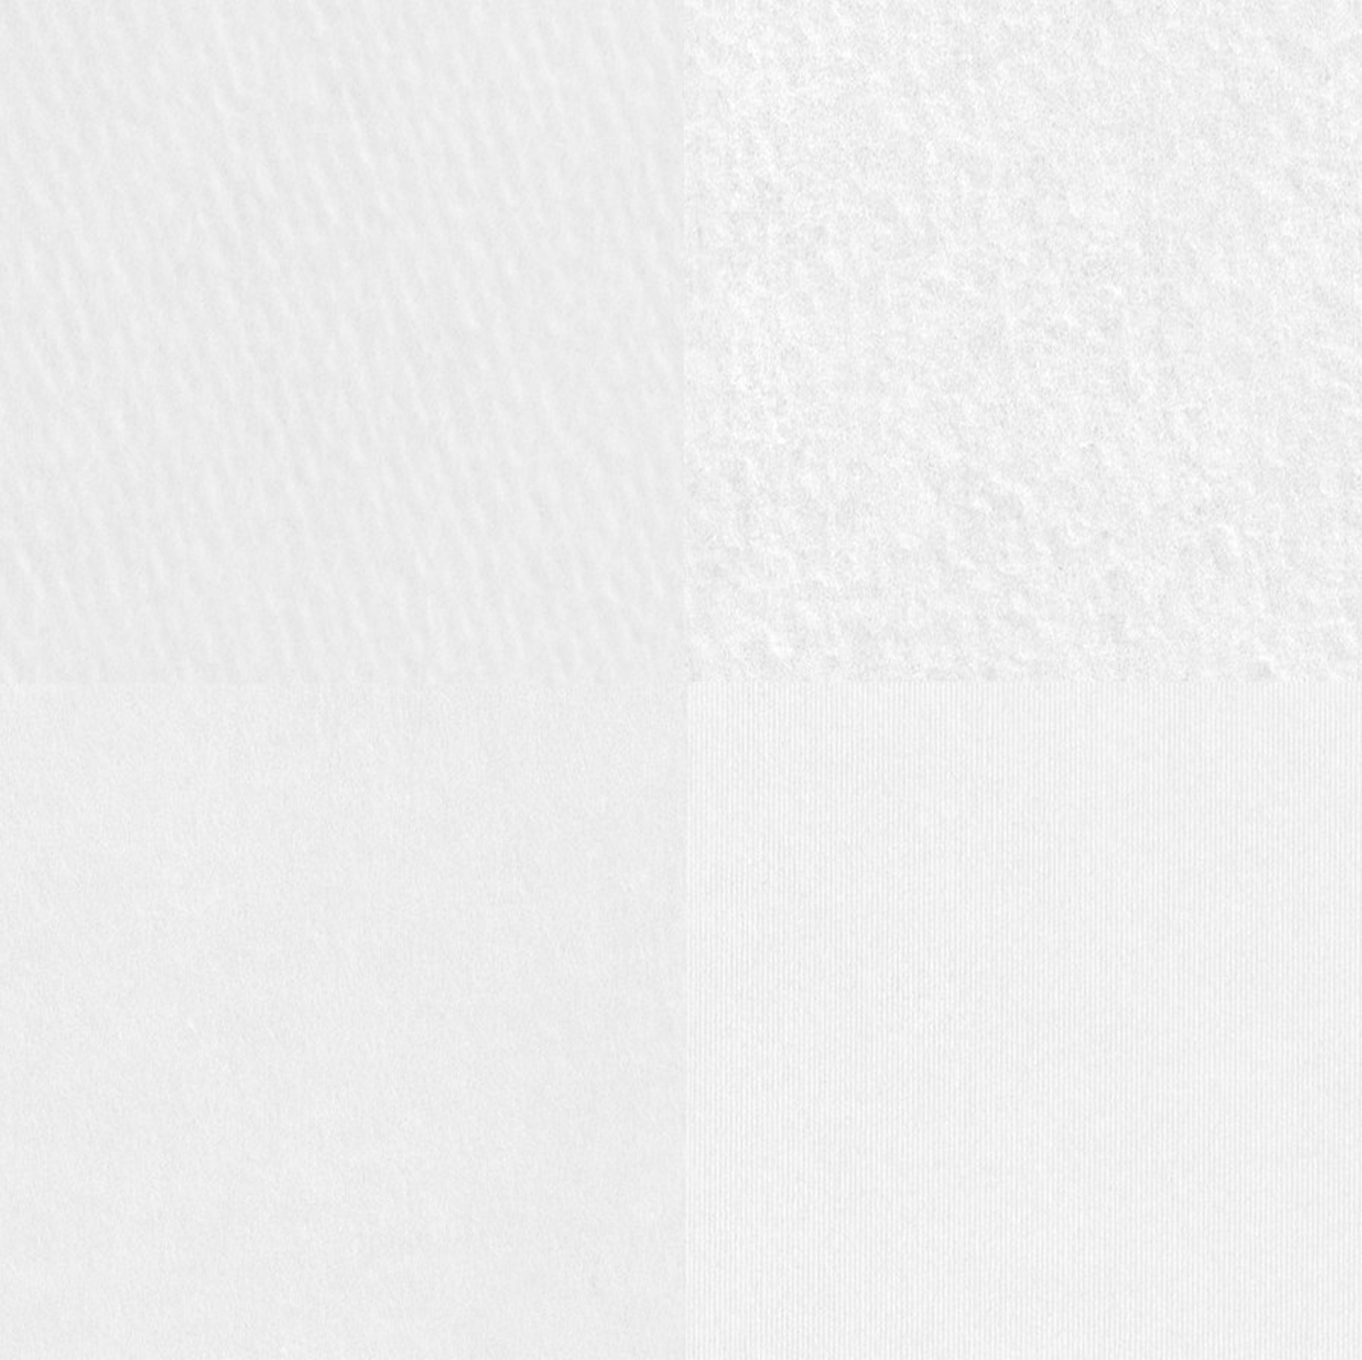 Premium Photo  A square white piece of plain paper on white background